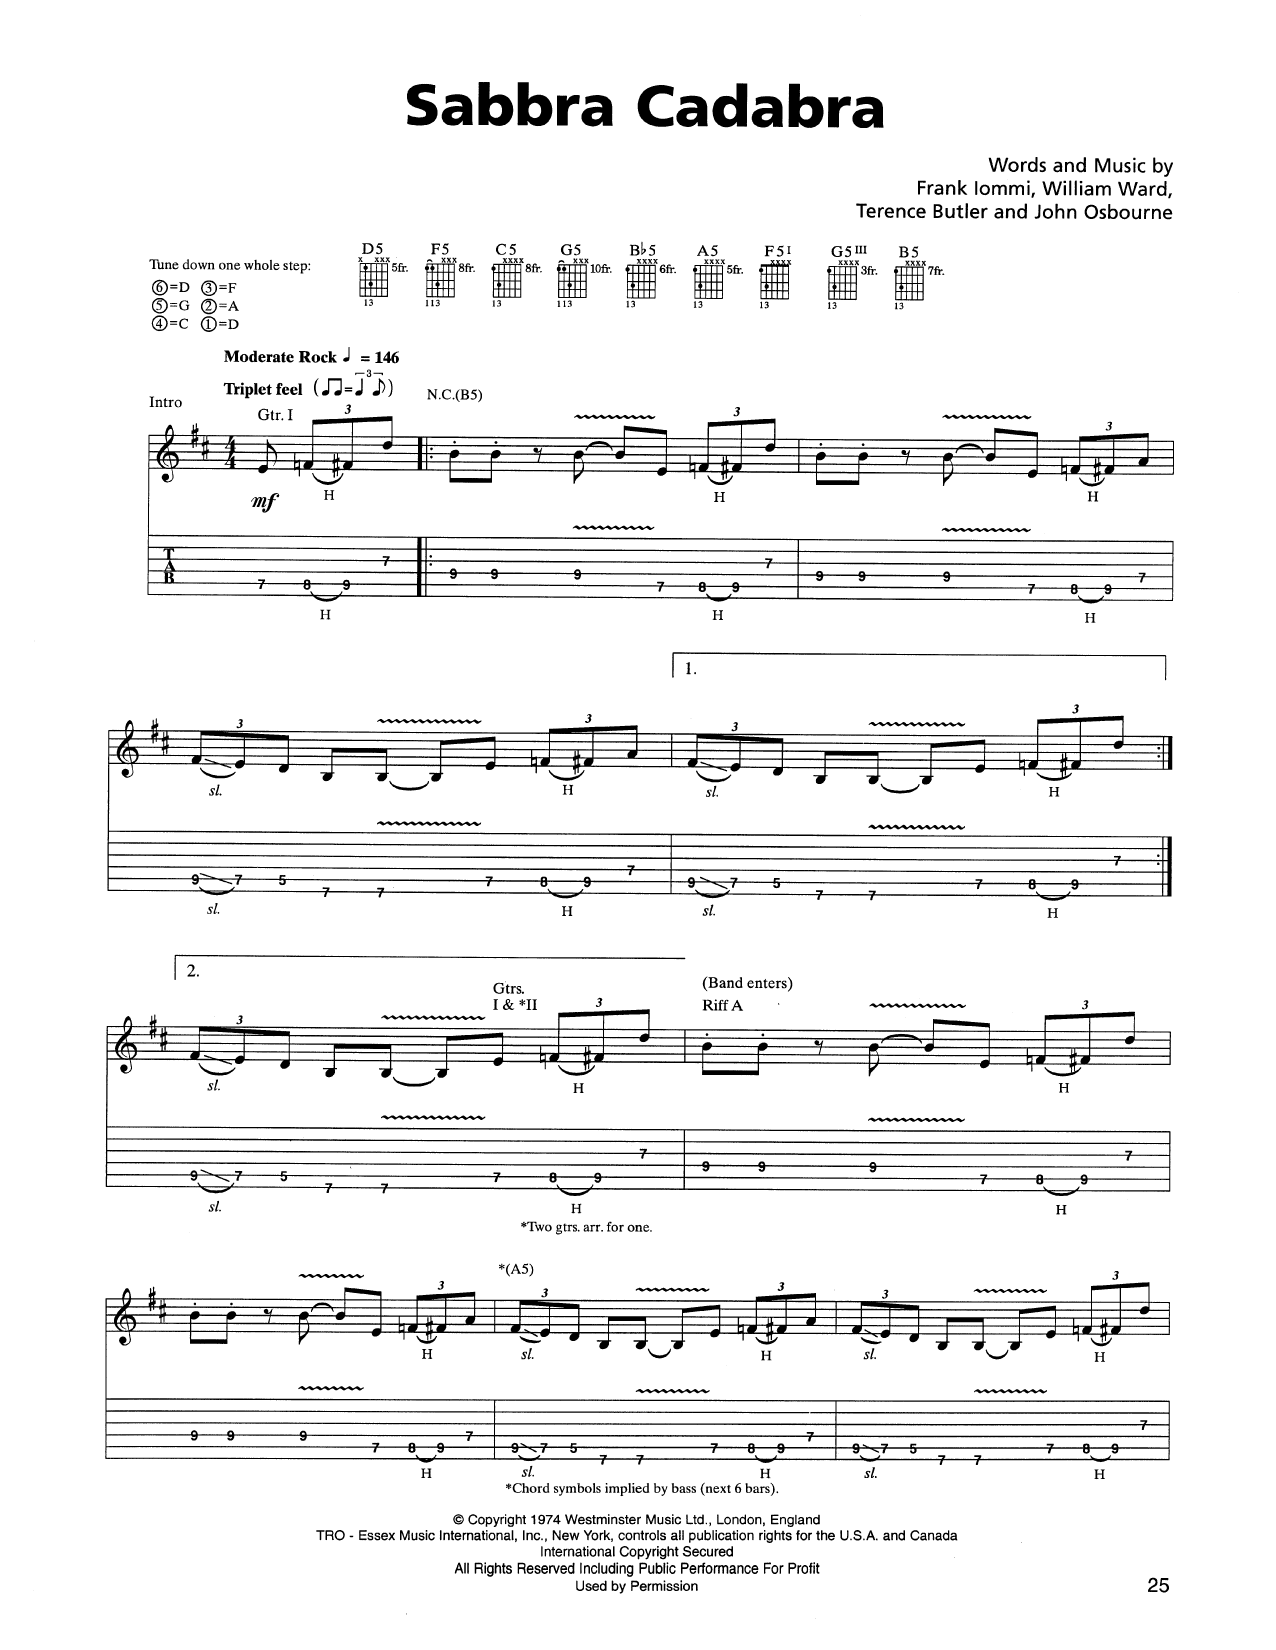 Metallica Sabbra Cadabra Sheet Music Notes & Chords for Guitar Tab - Download or Print PDF